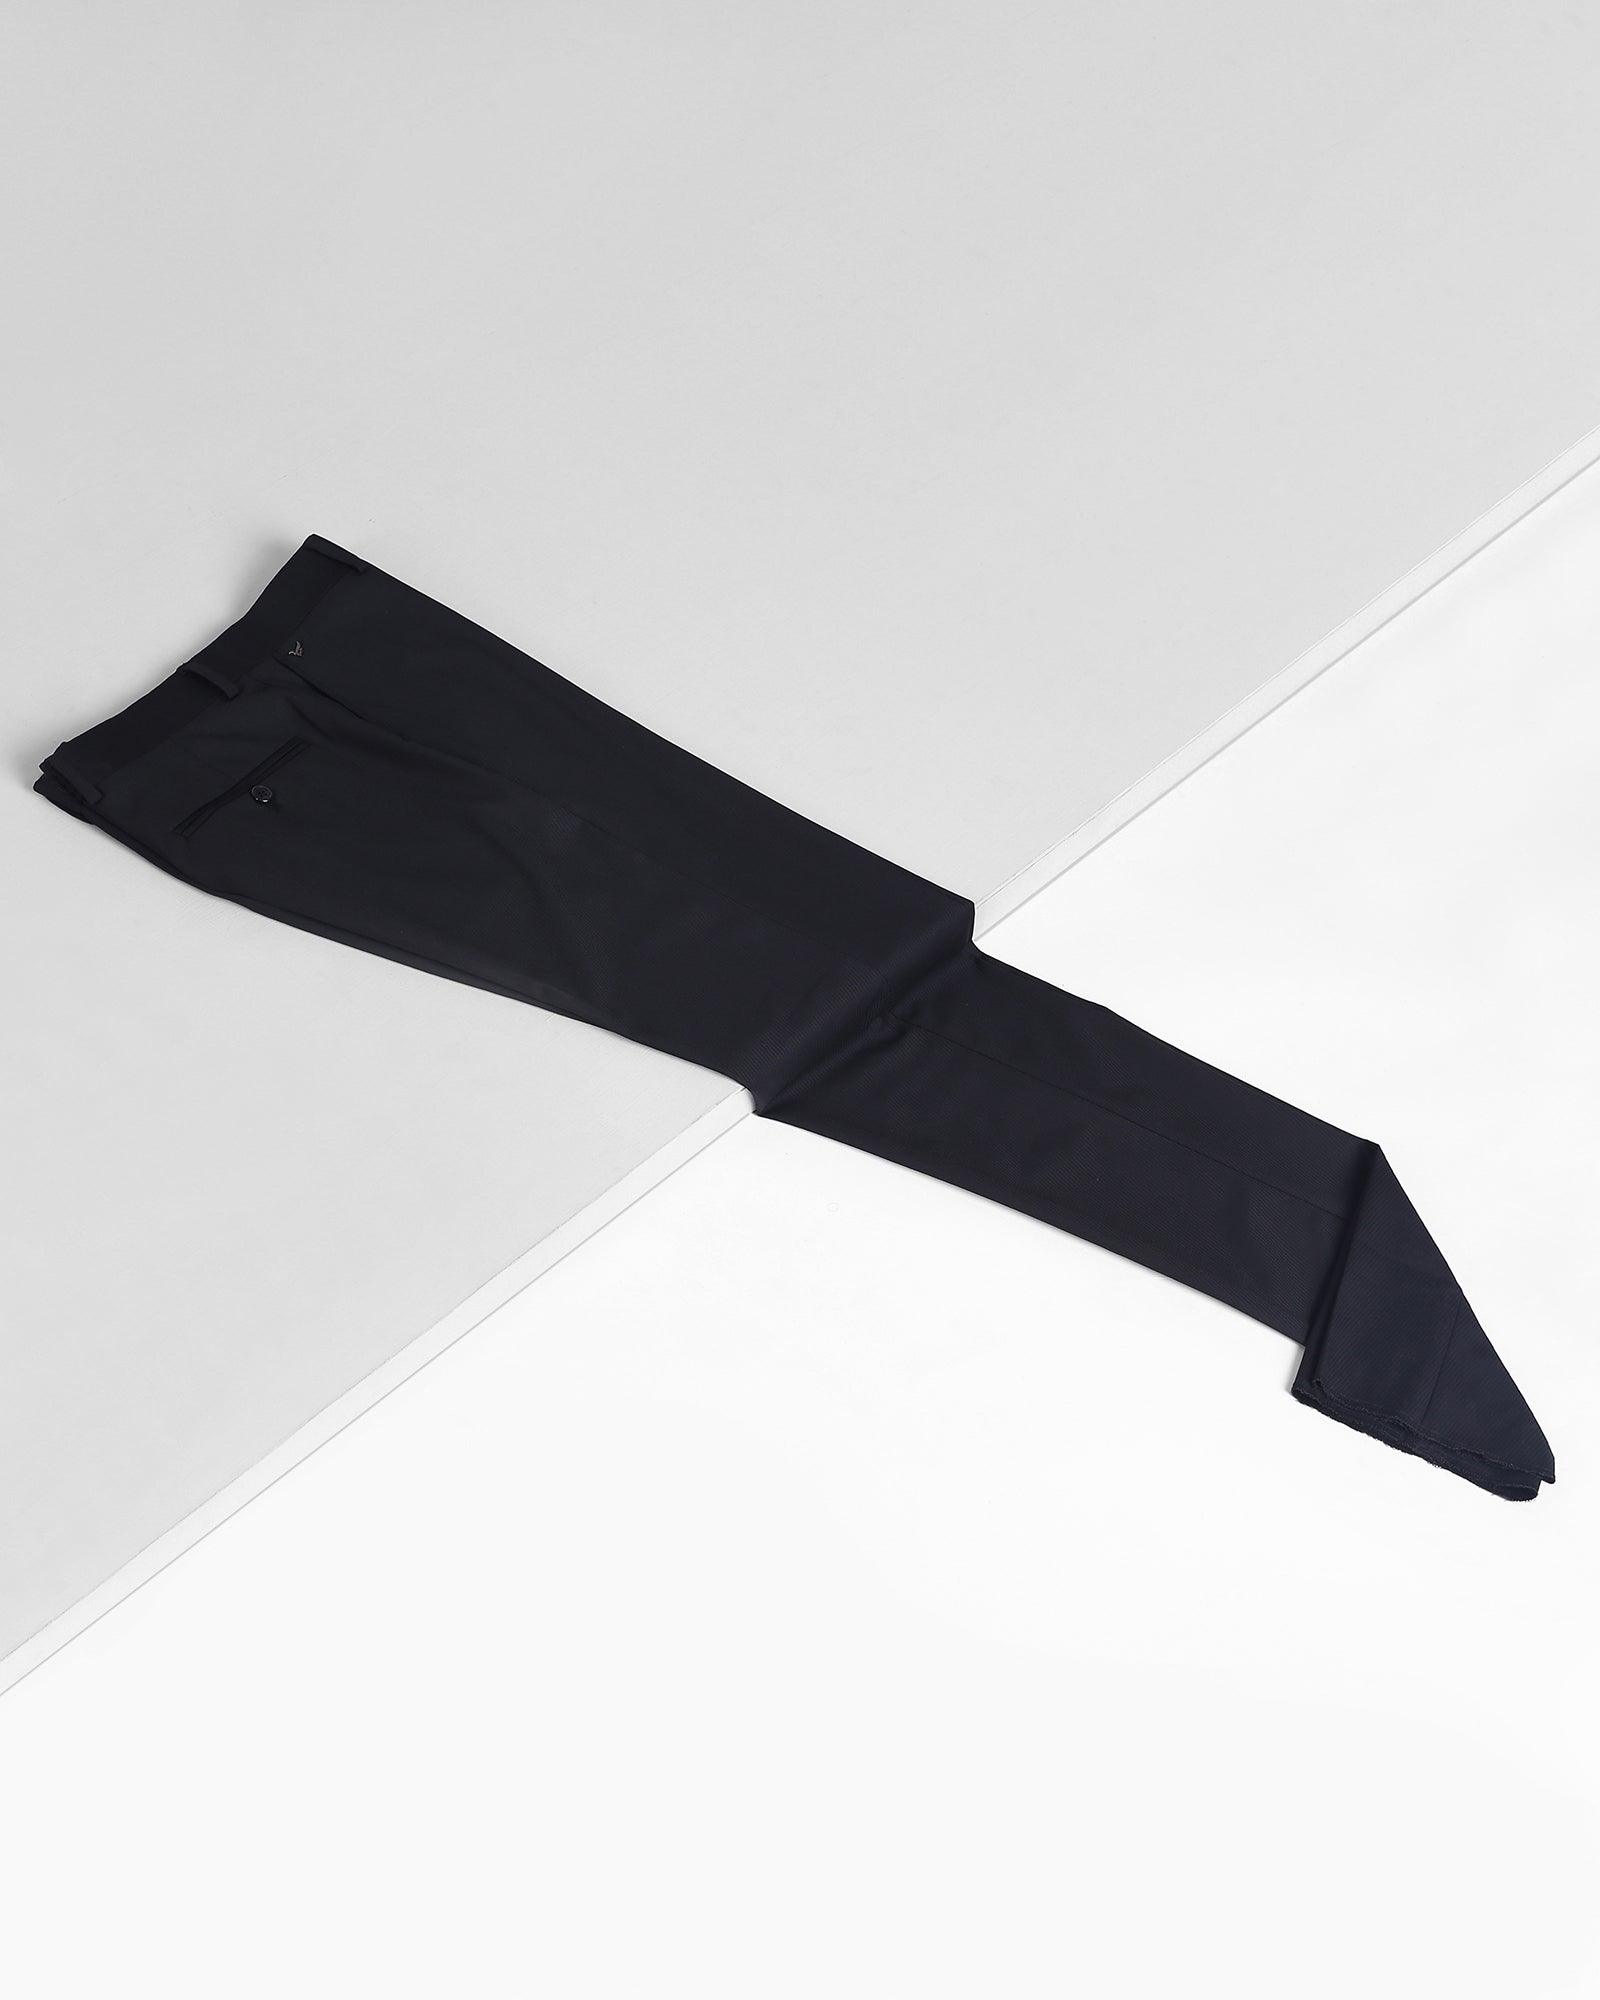 Slim Fit B-91 Formal Black Textured Trouser - Serret